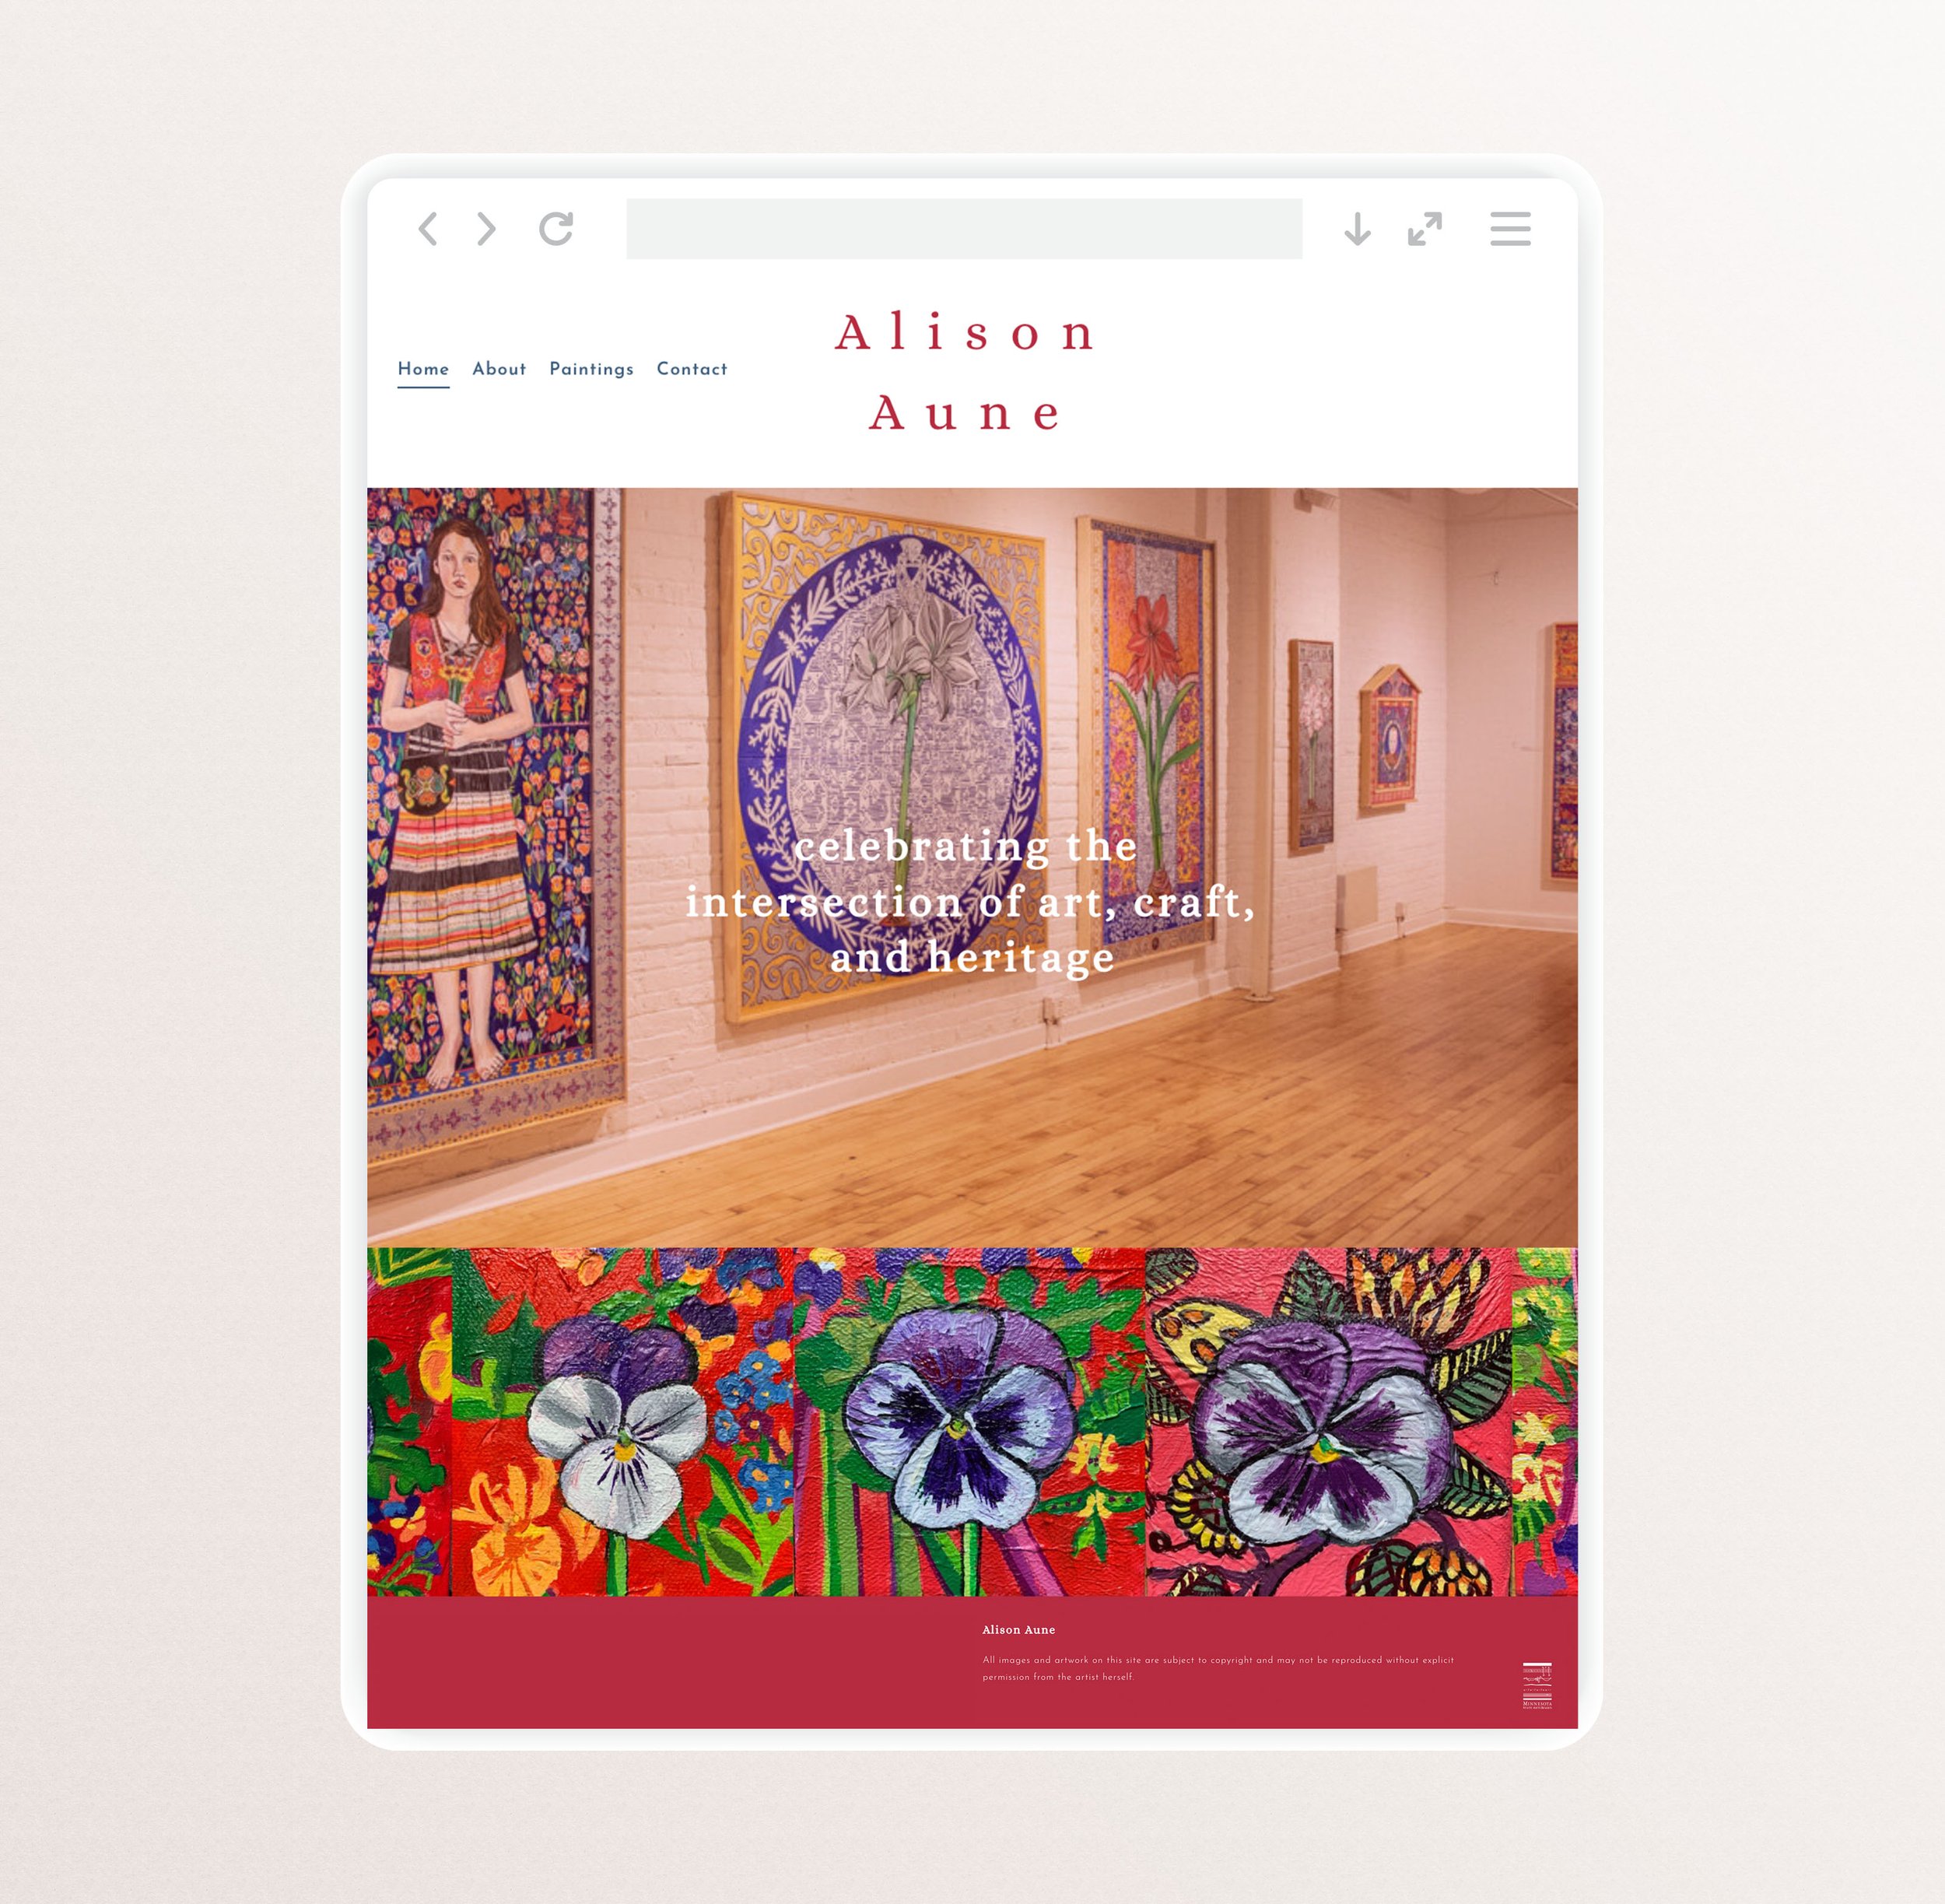 AlisonA_homepage.jpg